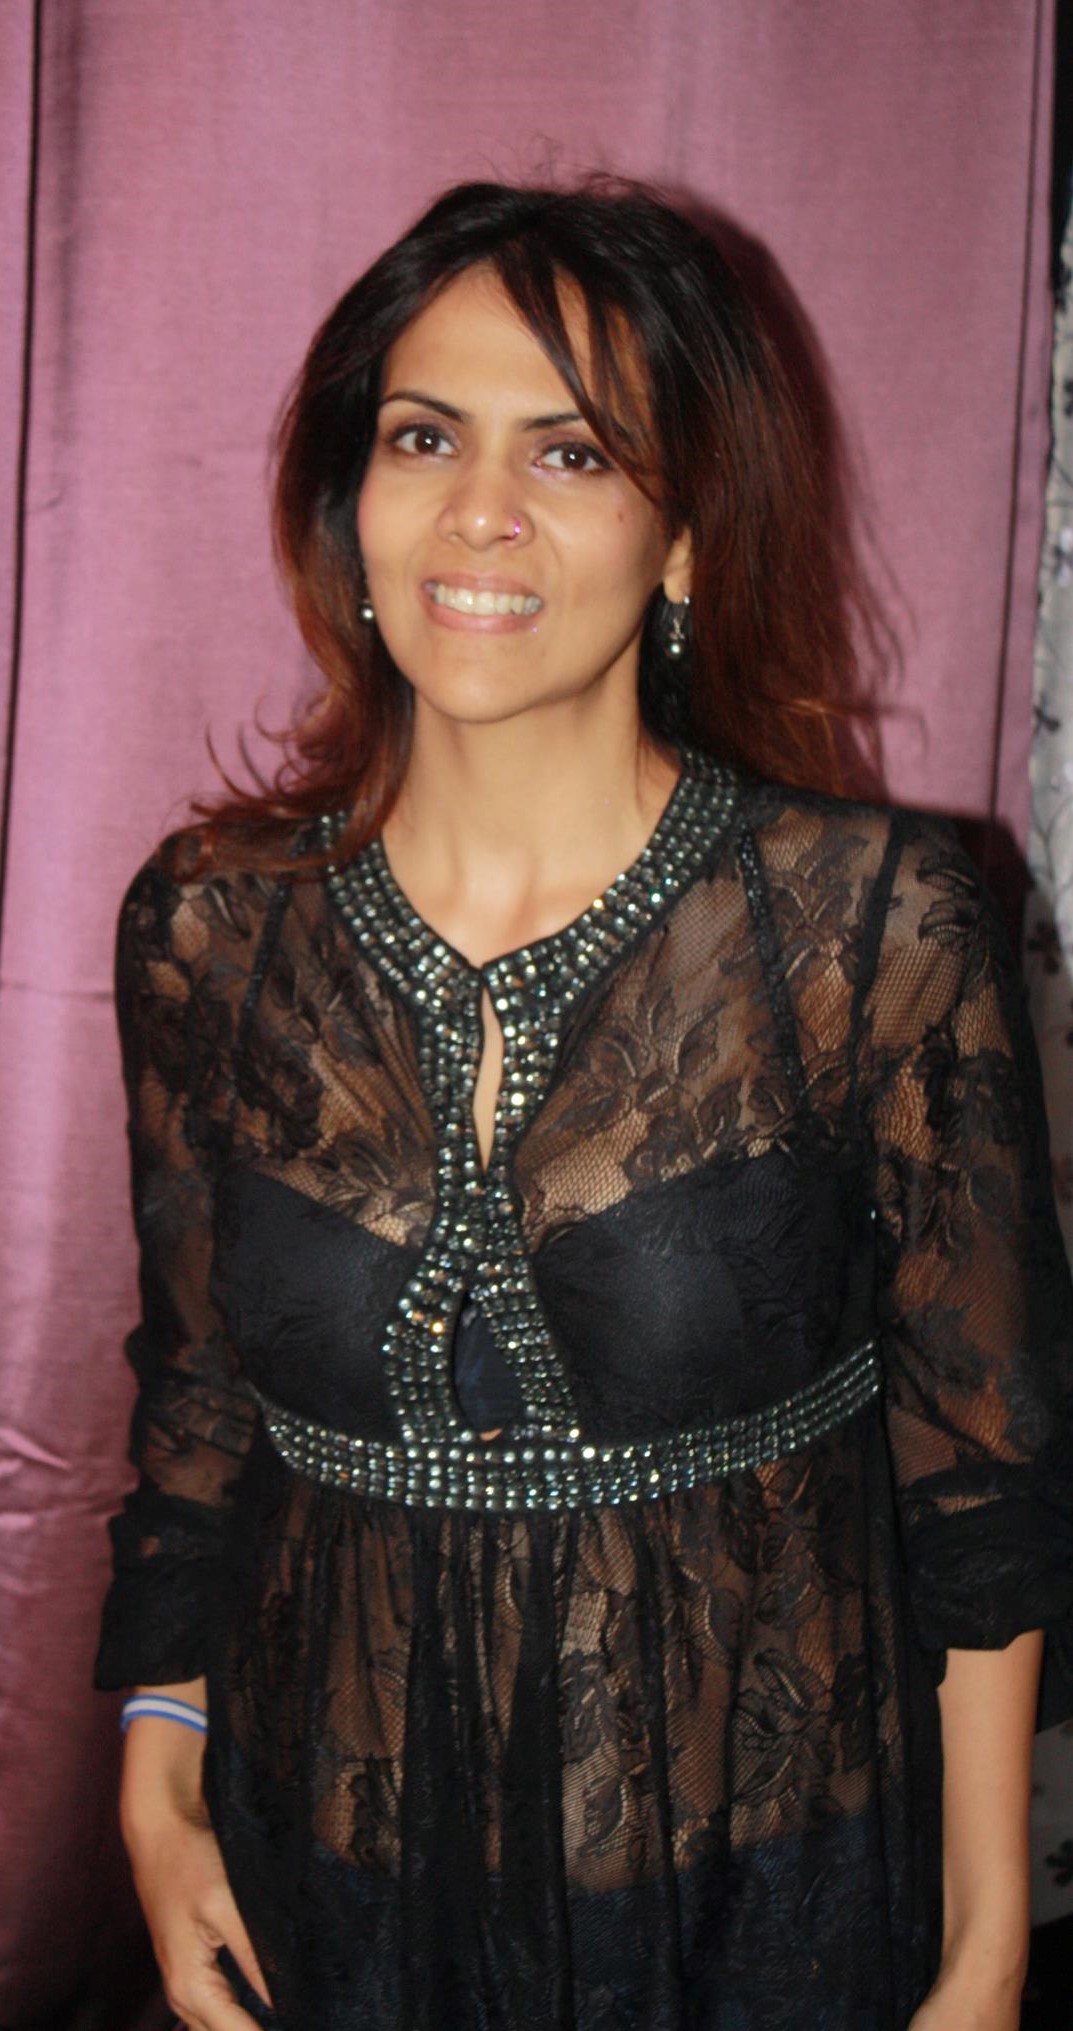 Caralisa Monteiro